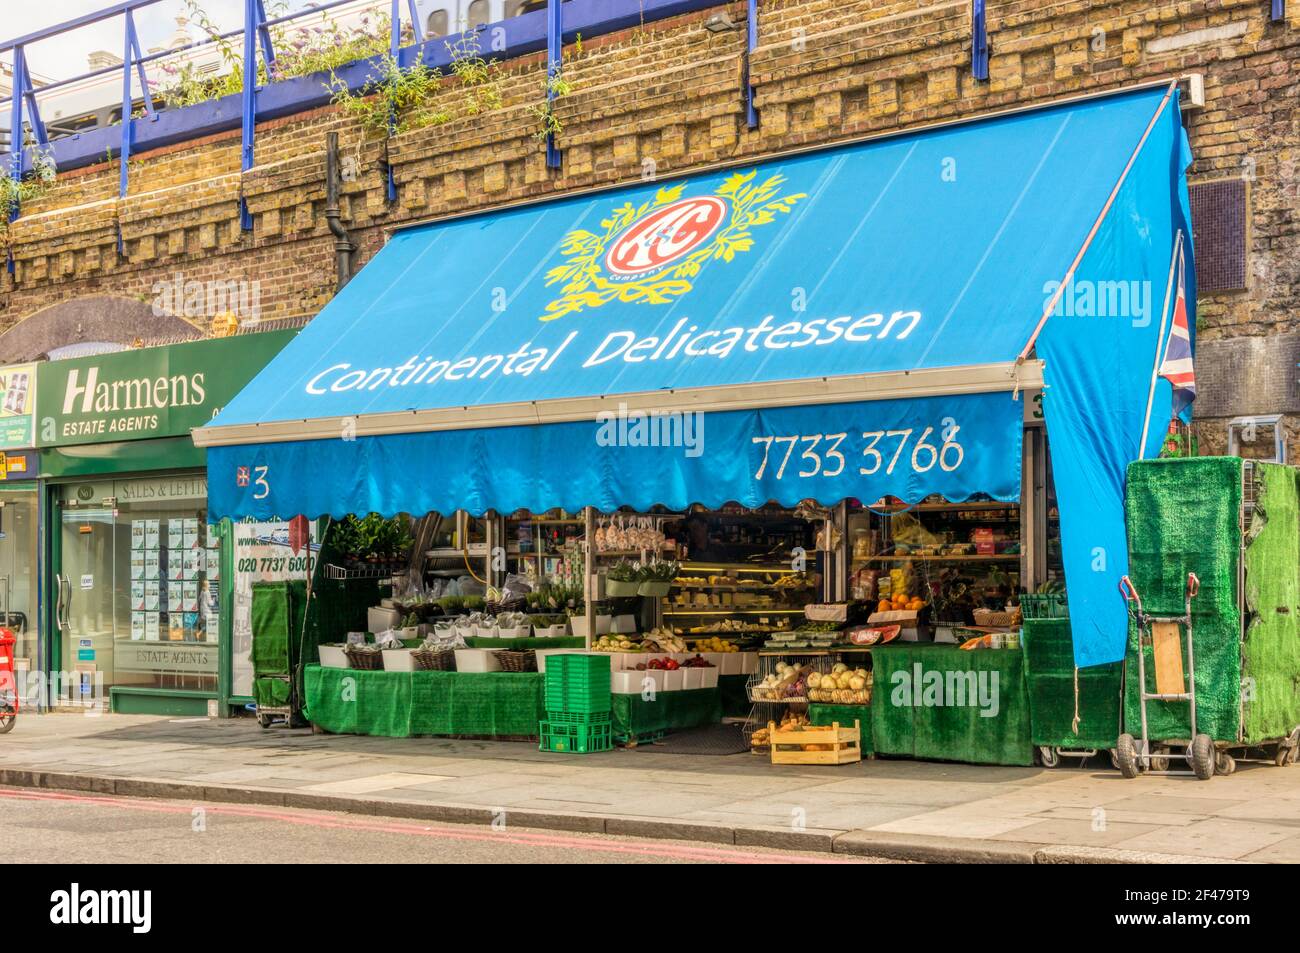 AC Continental Delicatessen in a railway arch at Atlantic Road, Brixton. Stock Photo